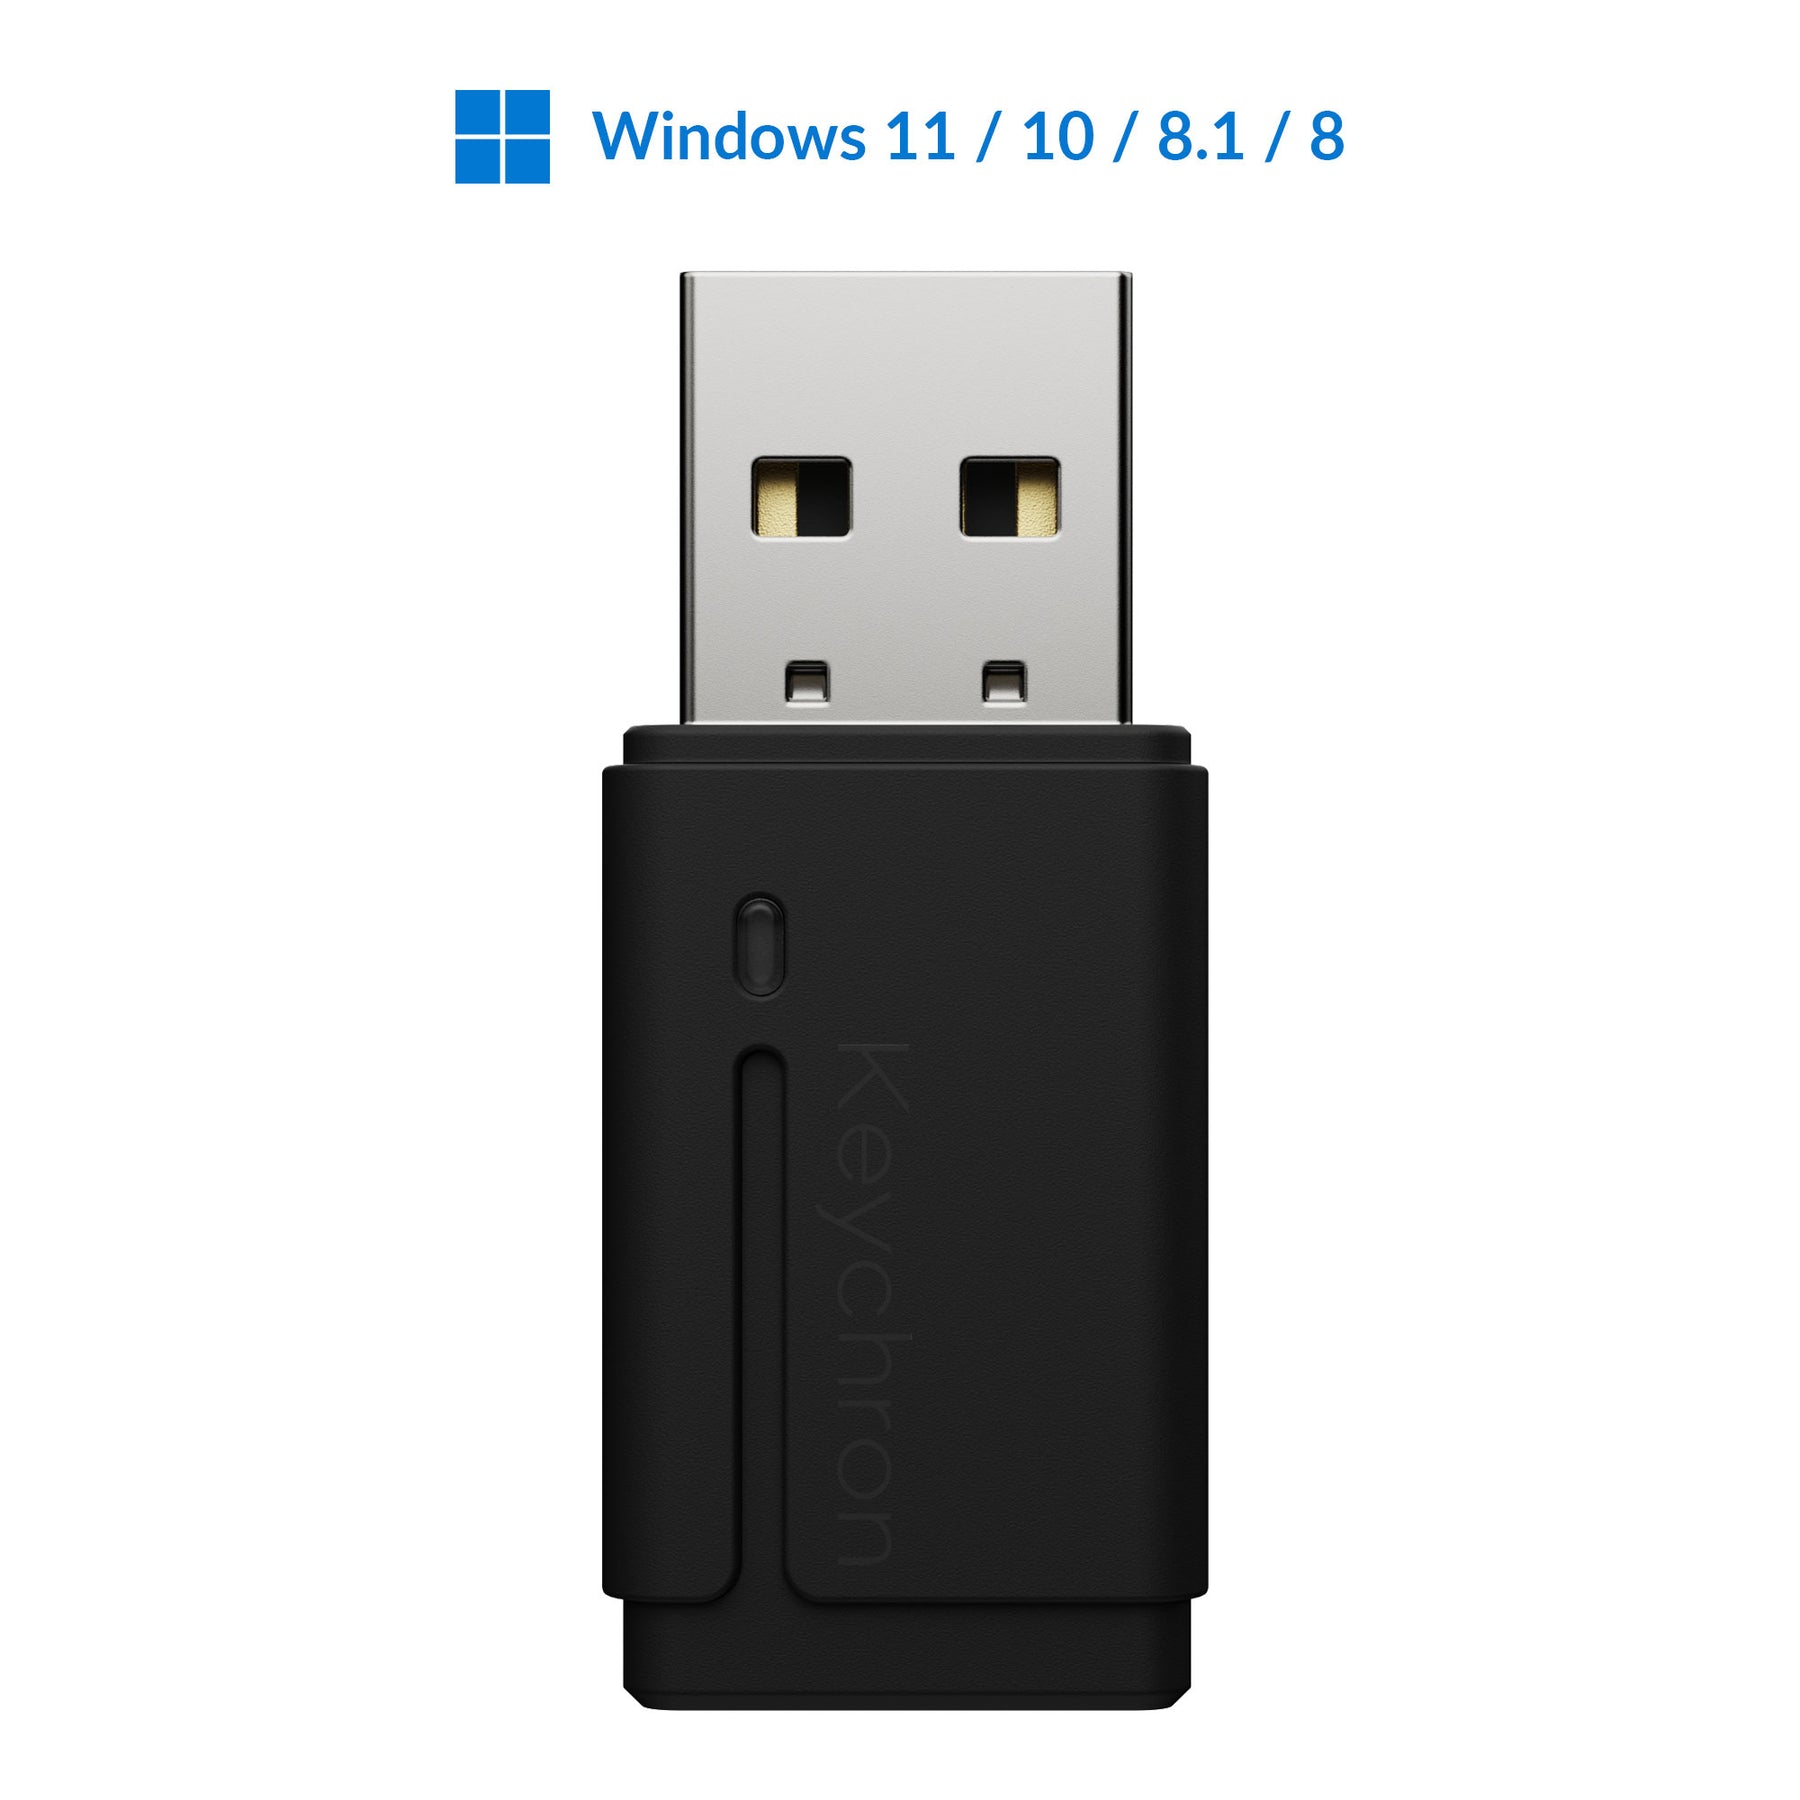 Slid Kiks Bule Keychron USB Bluetooth Adapter for Windows PC